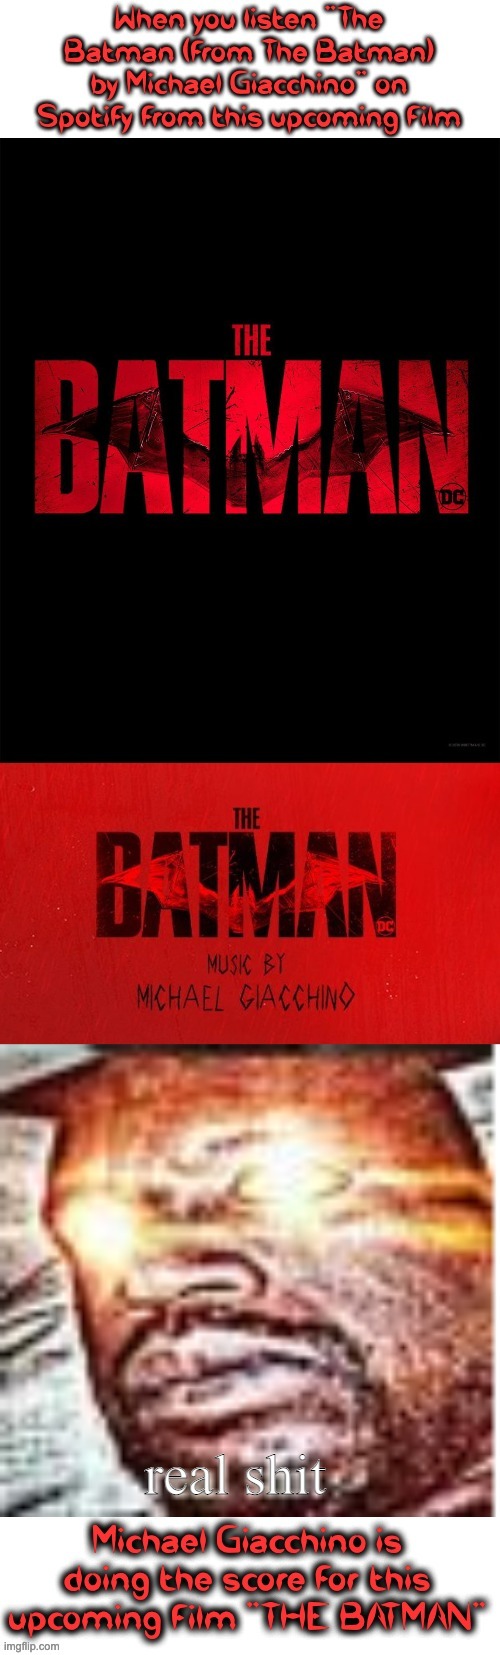 The batman upcoming film score by Michael Giacchino | made w/ Imgflip meme maker